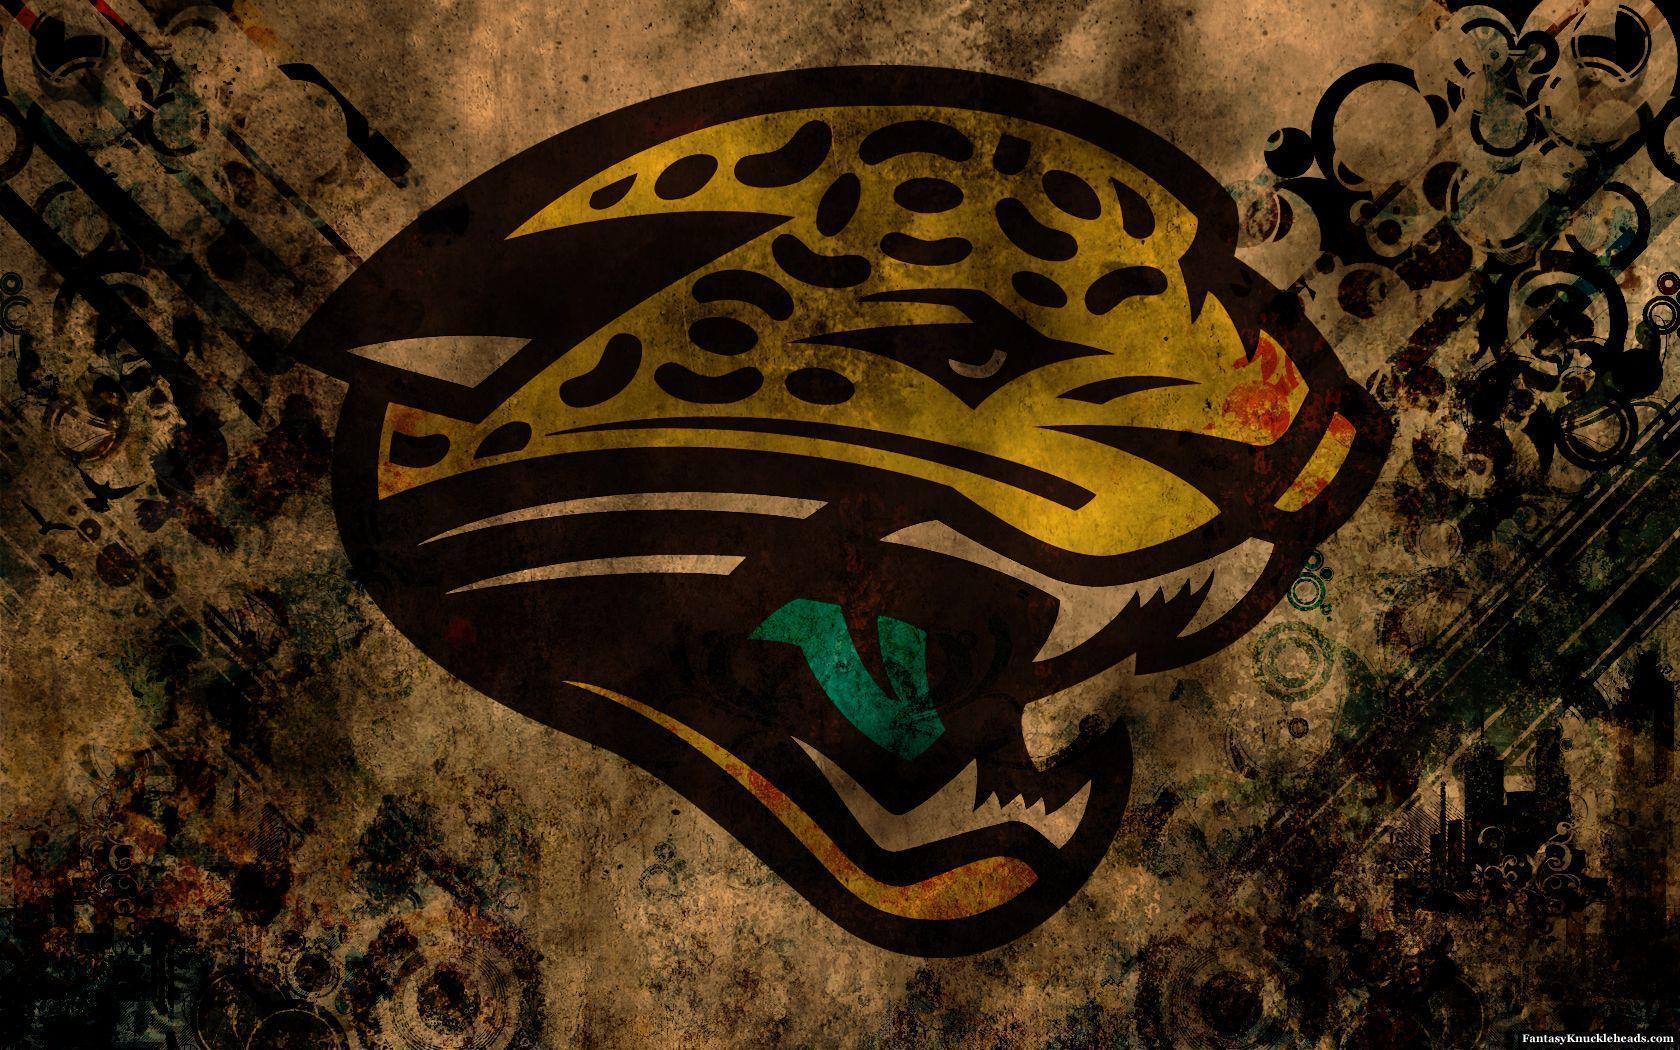 Jacksonville Jaguars wallpapers